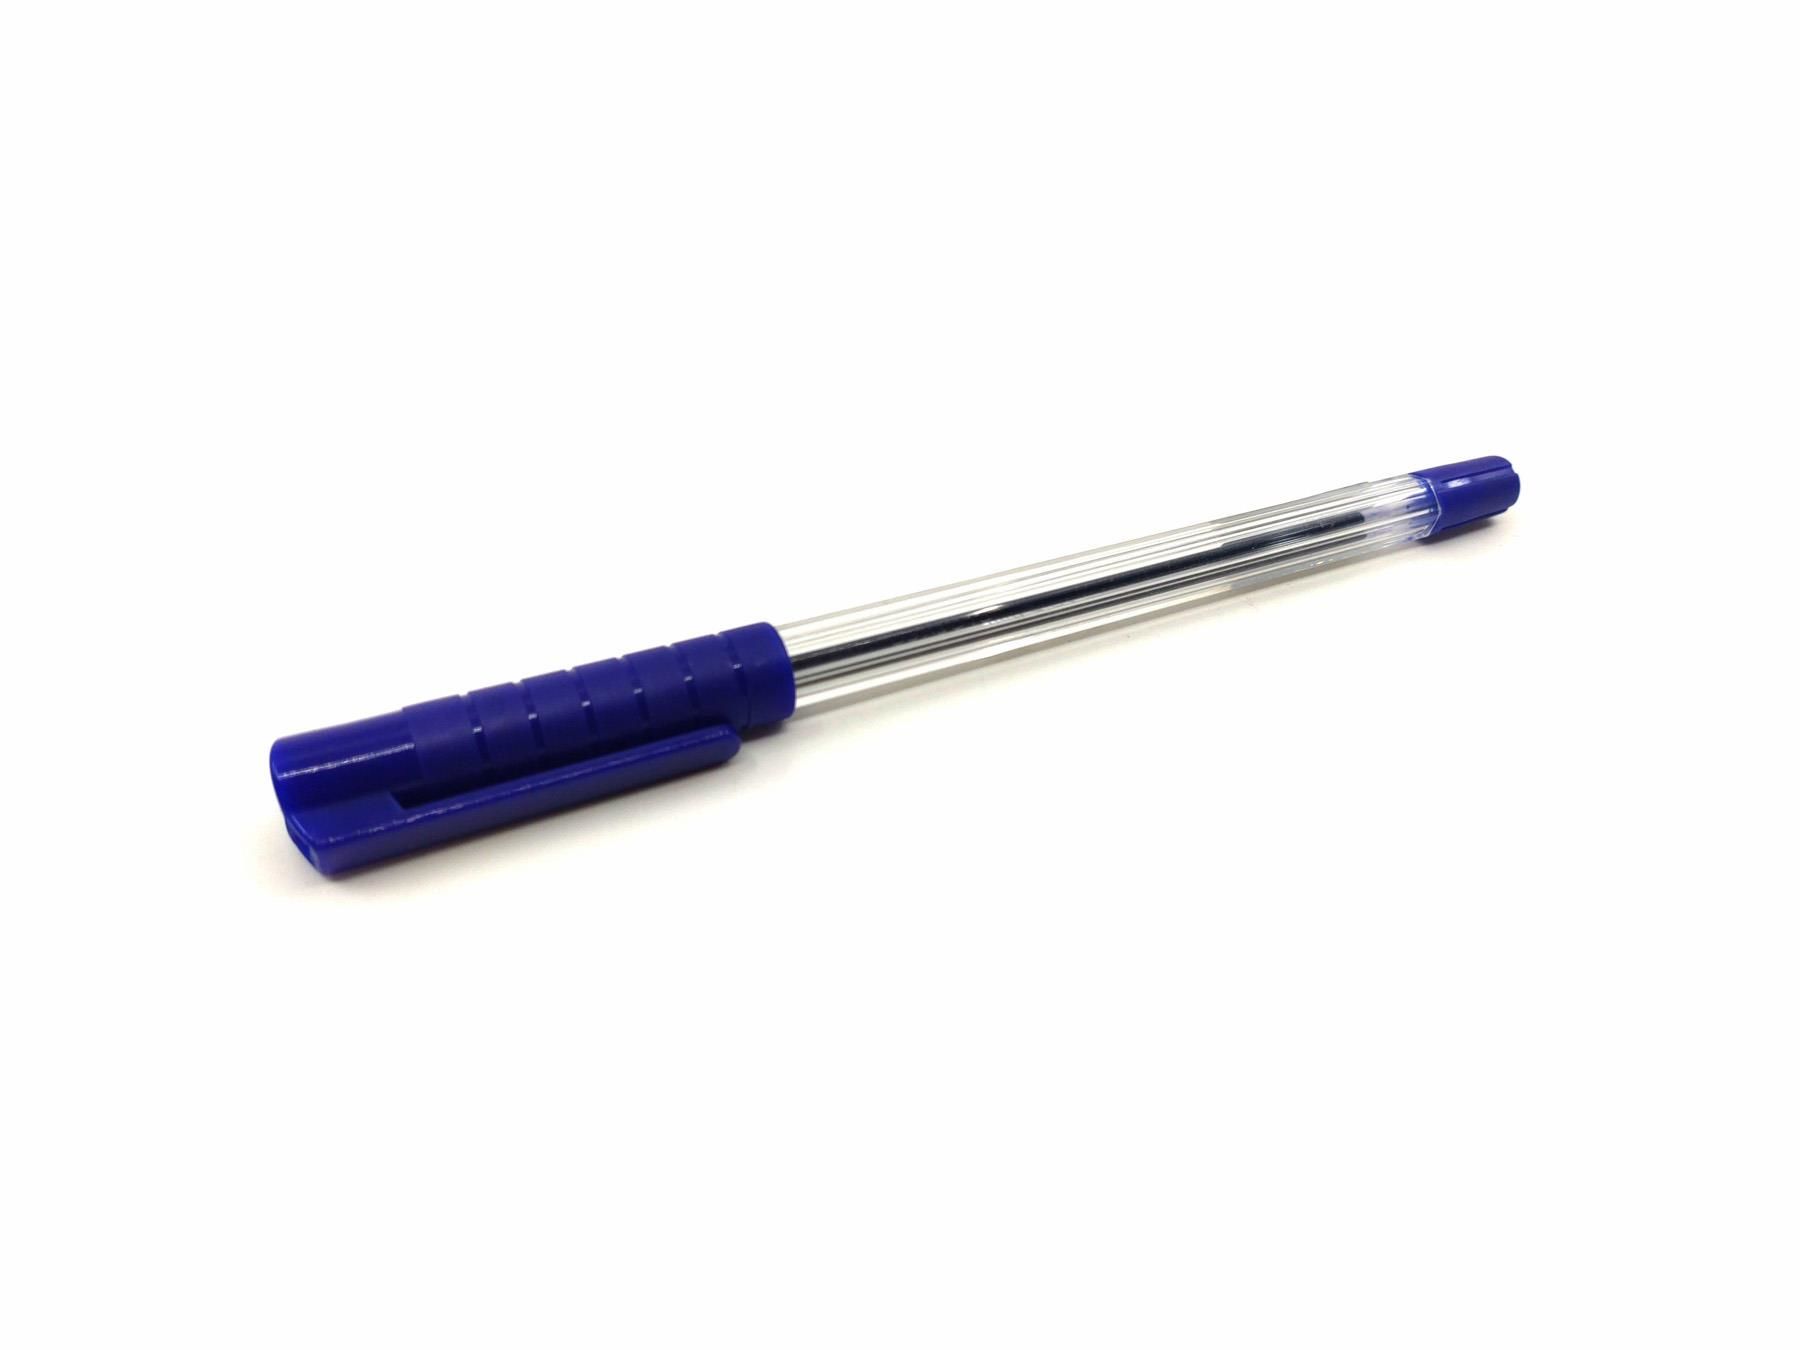 Umix Ball Pen Tükenmez Kalem Mavi U9900-Ma (1 adet)